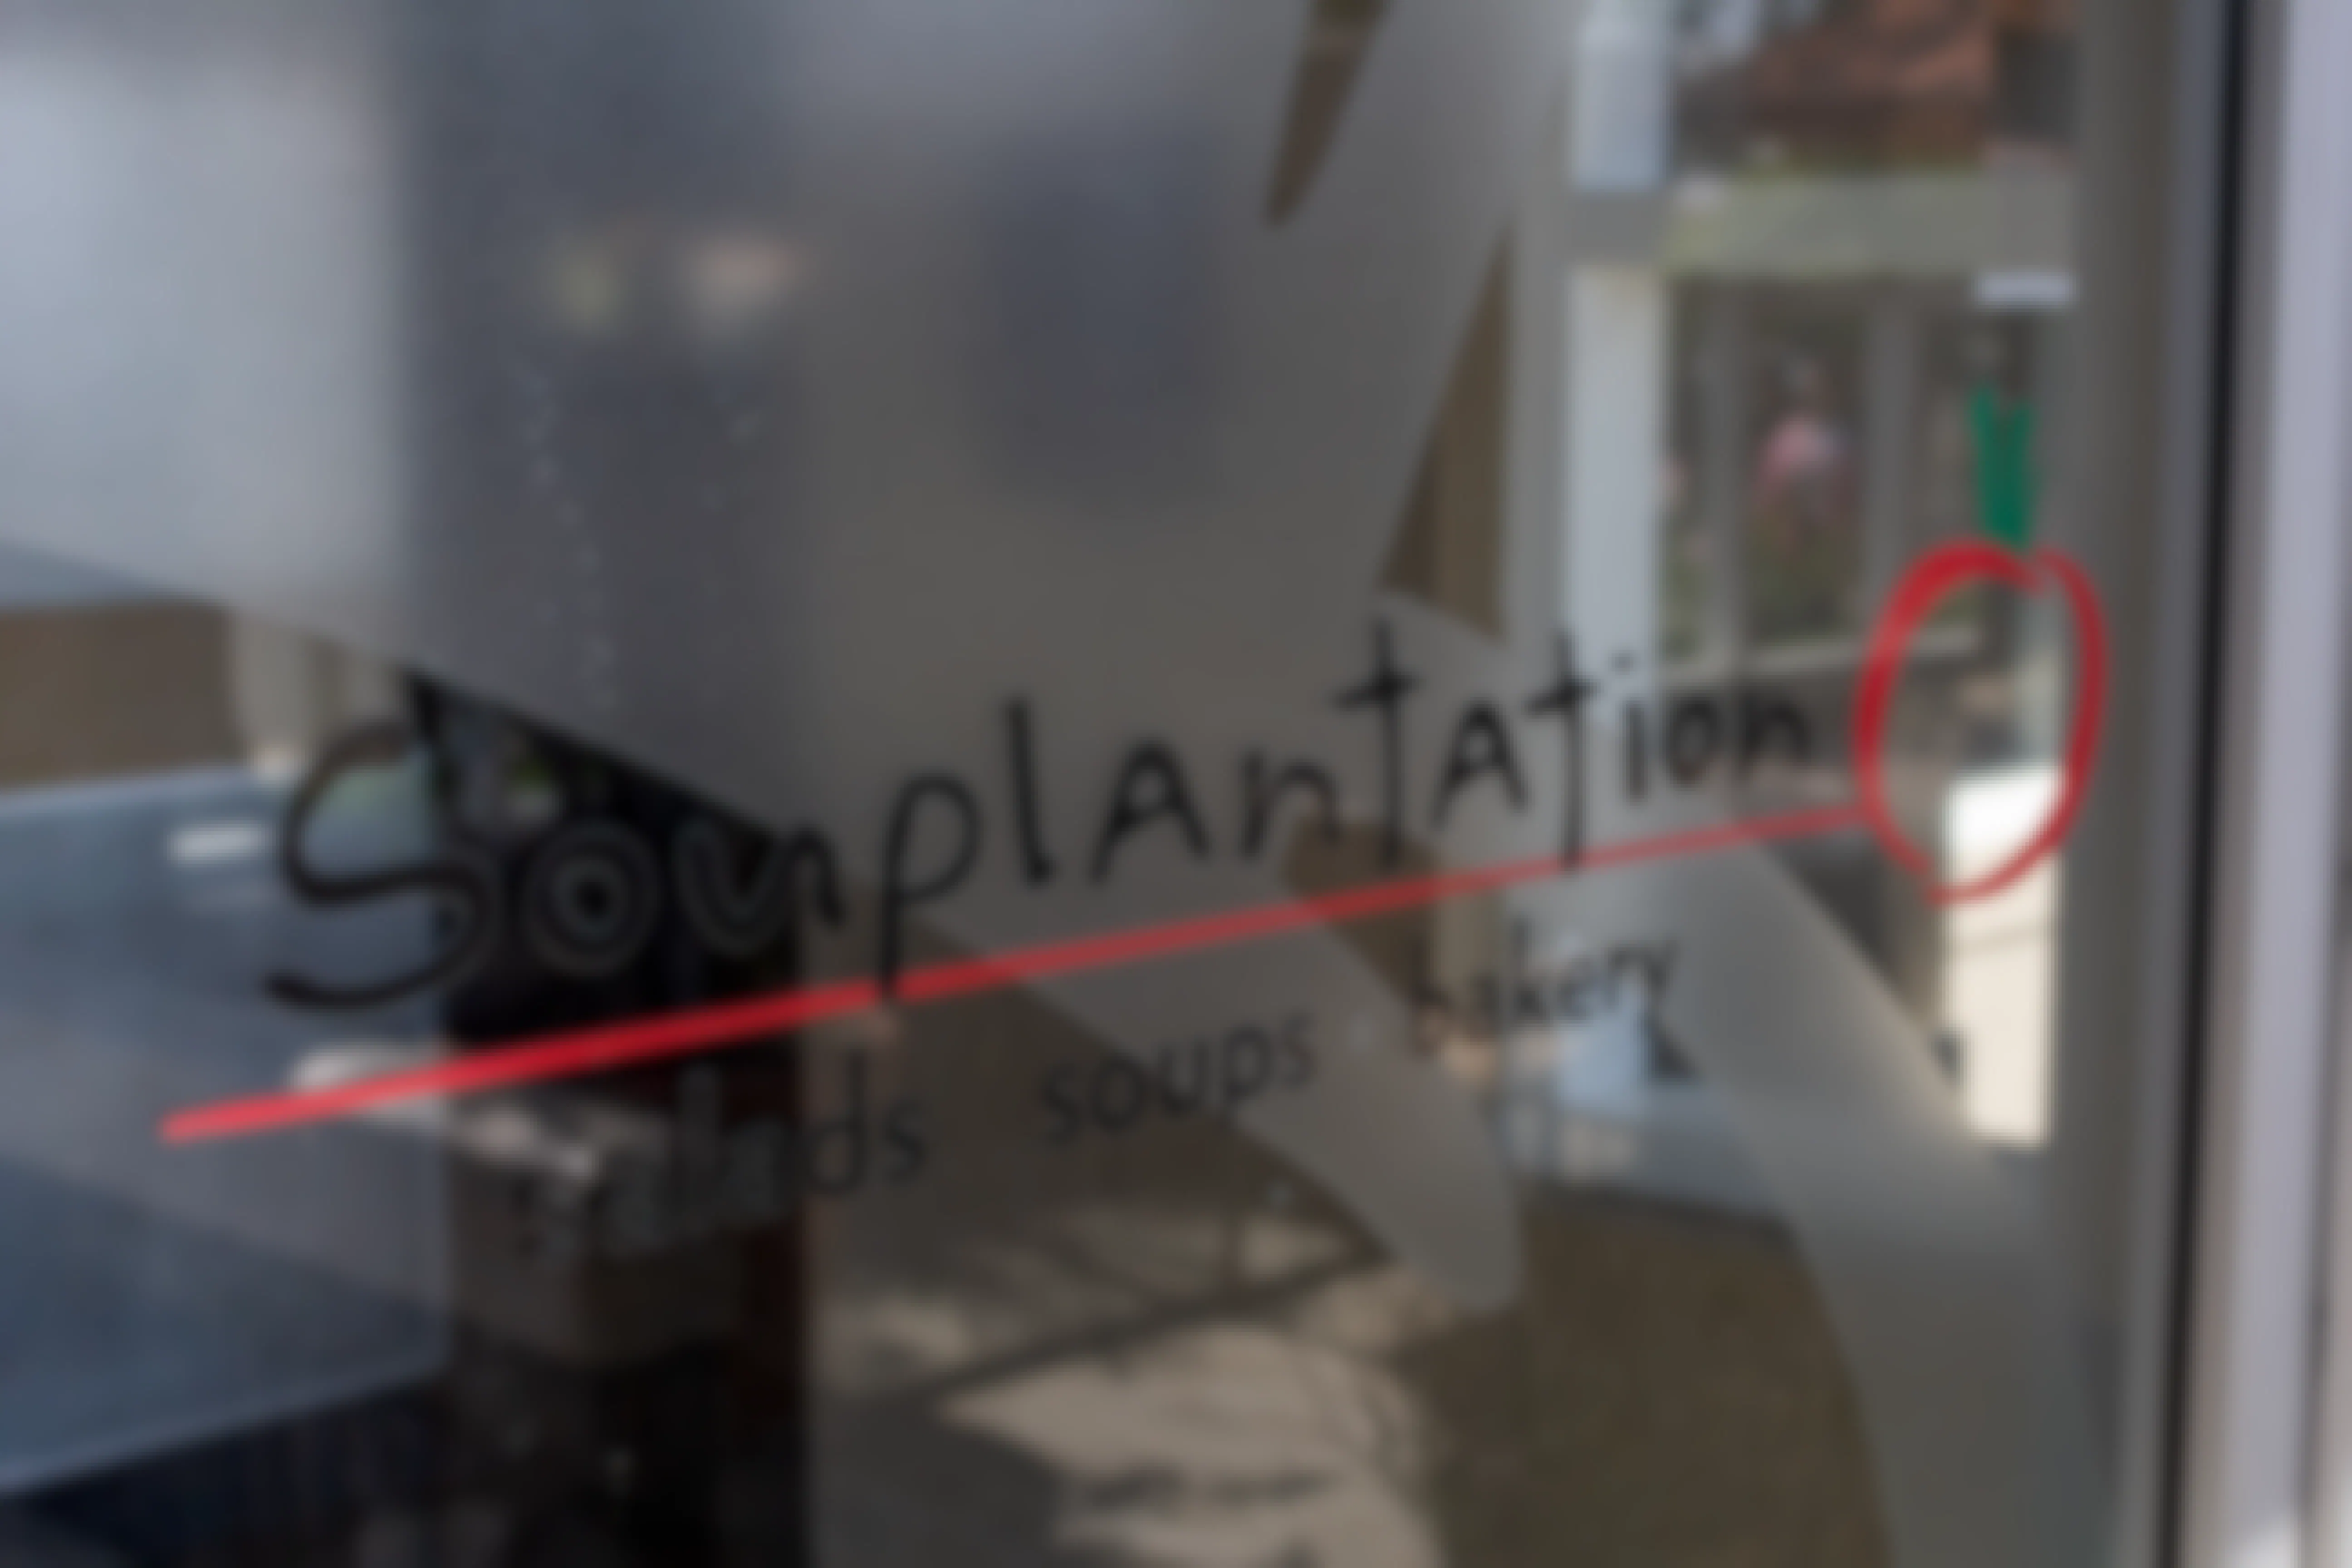 Souplantation branding on a glass door